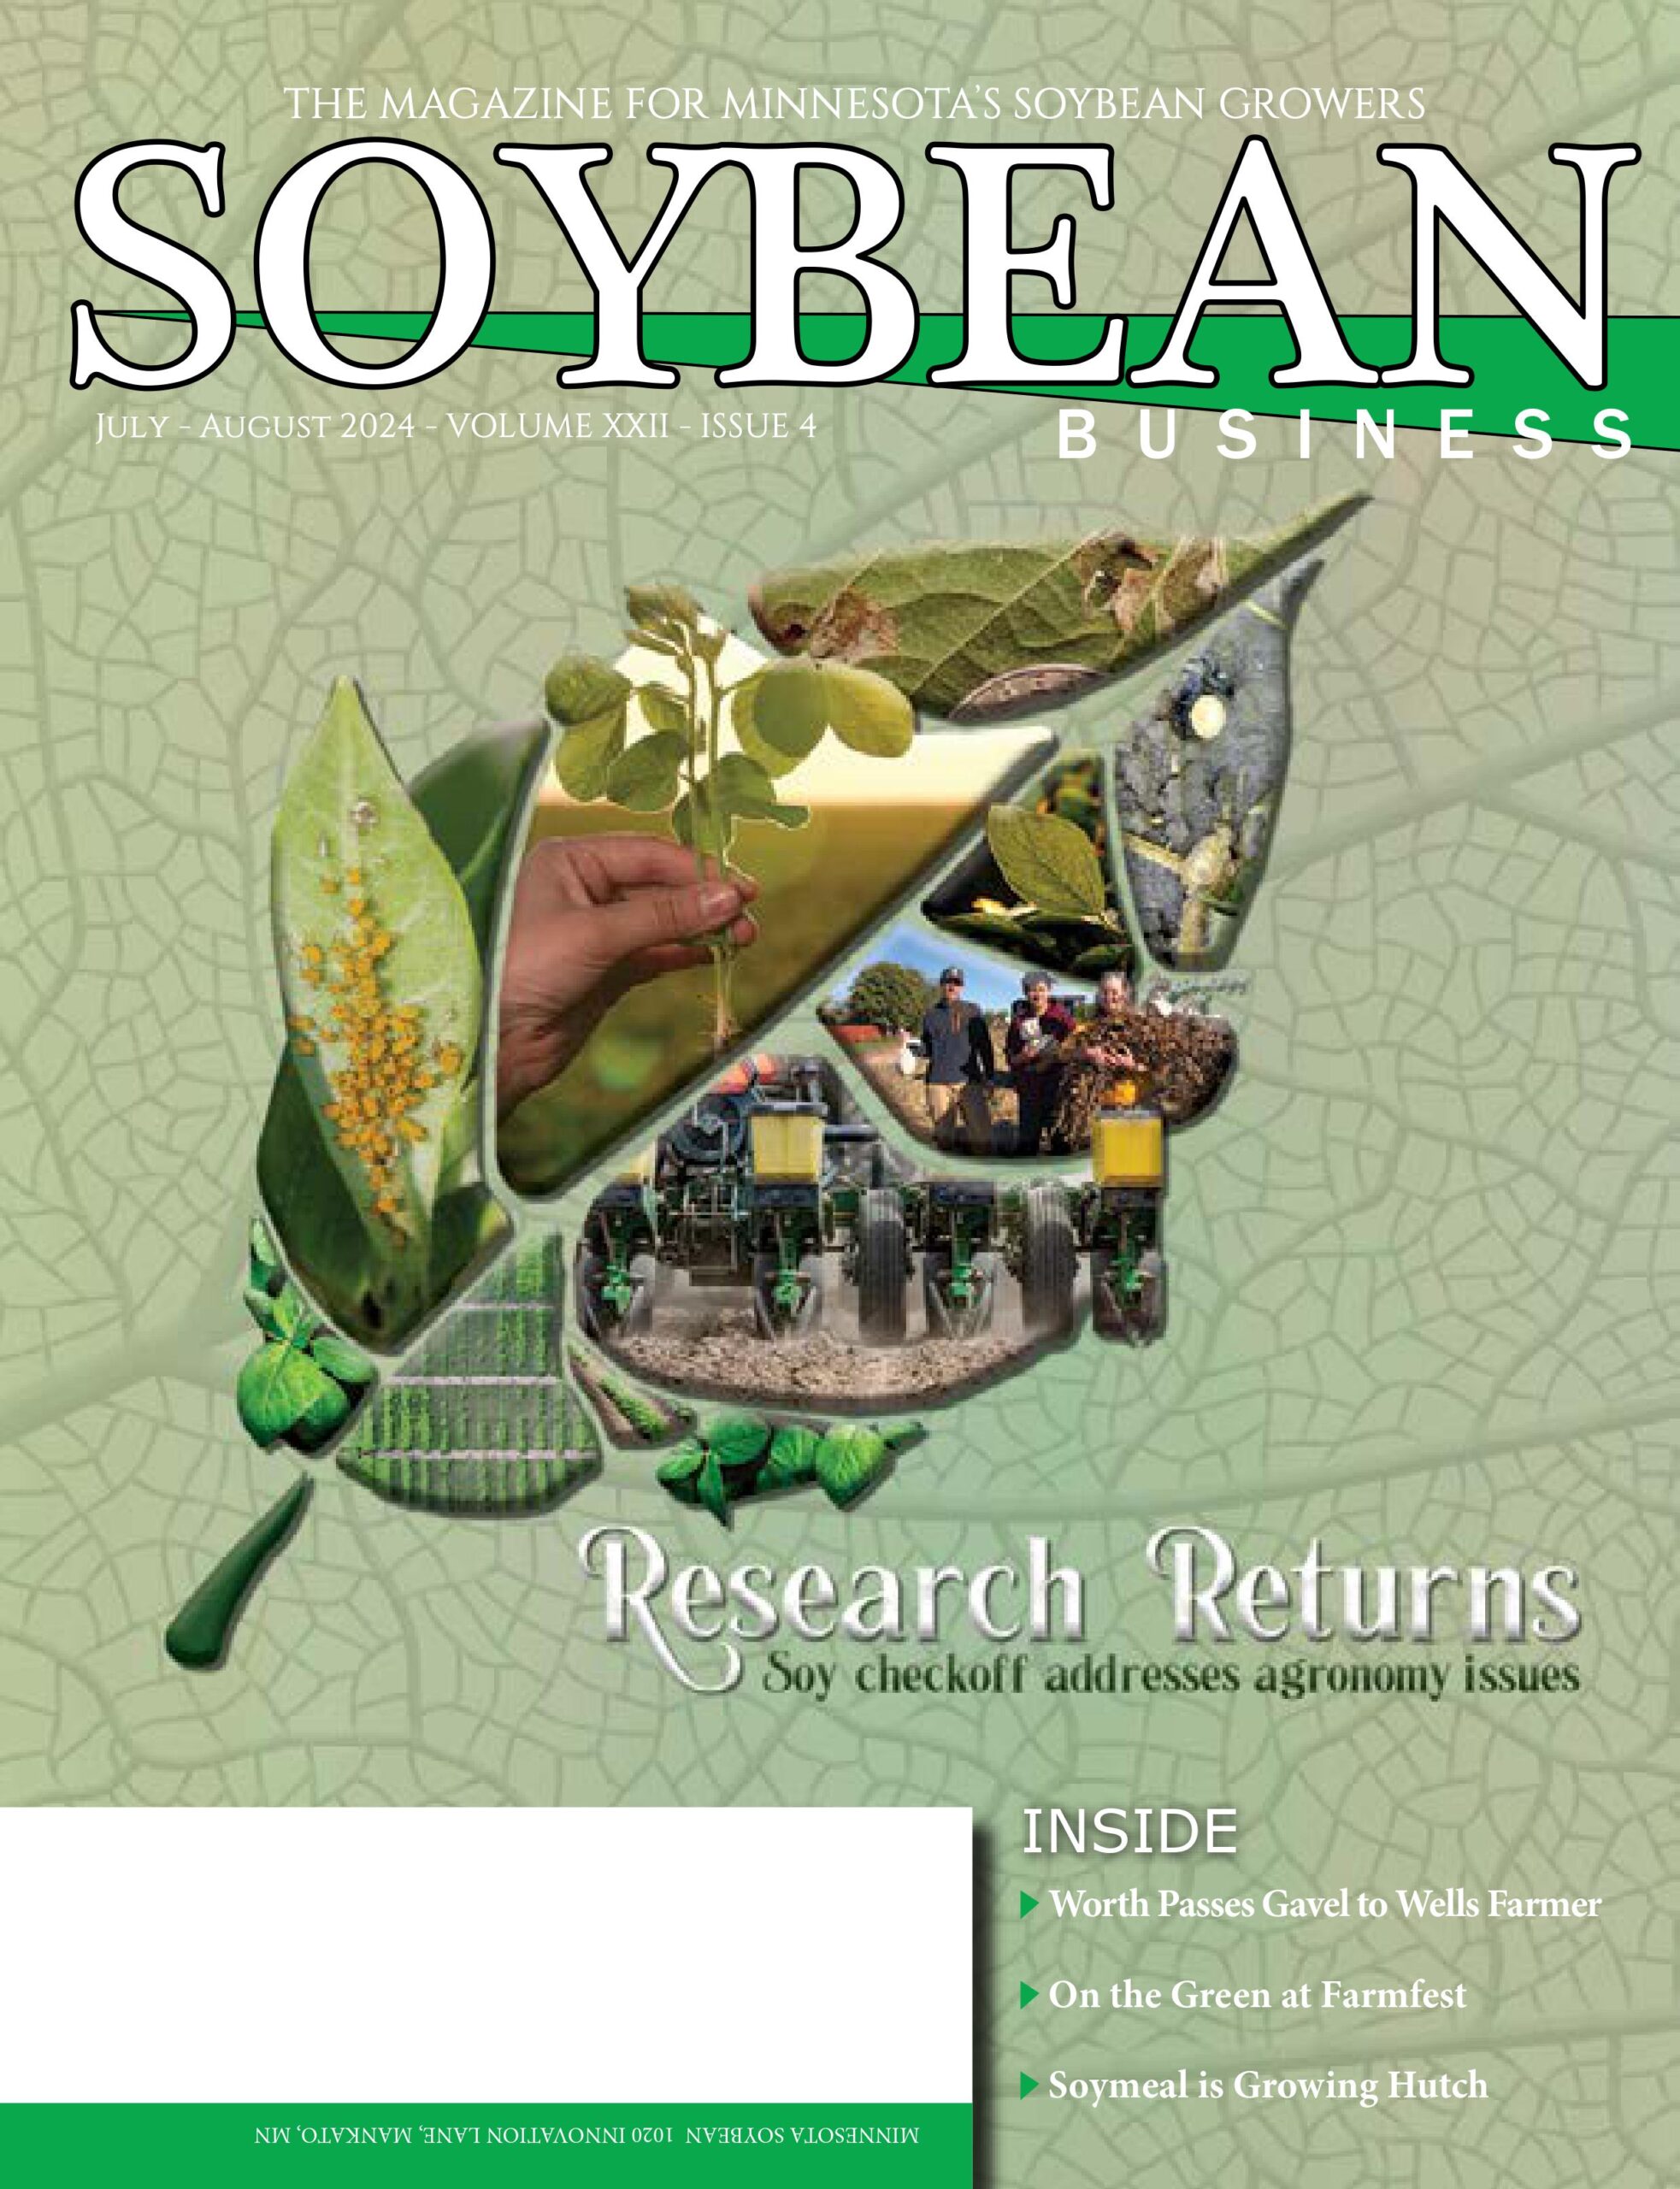 MSGA, Soybean business magazine